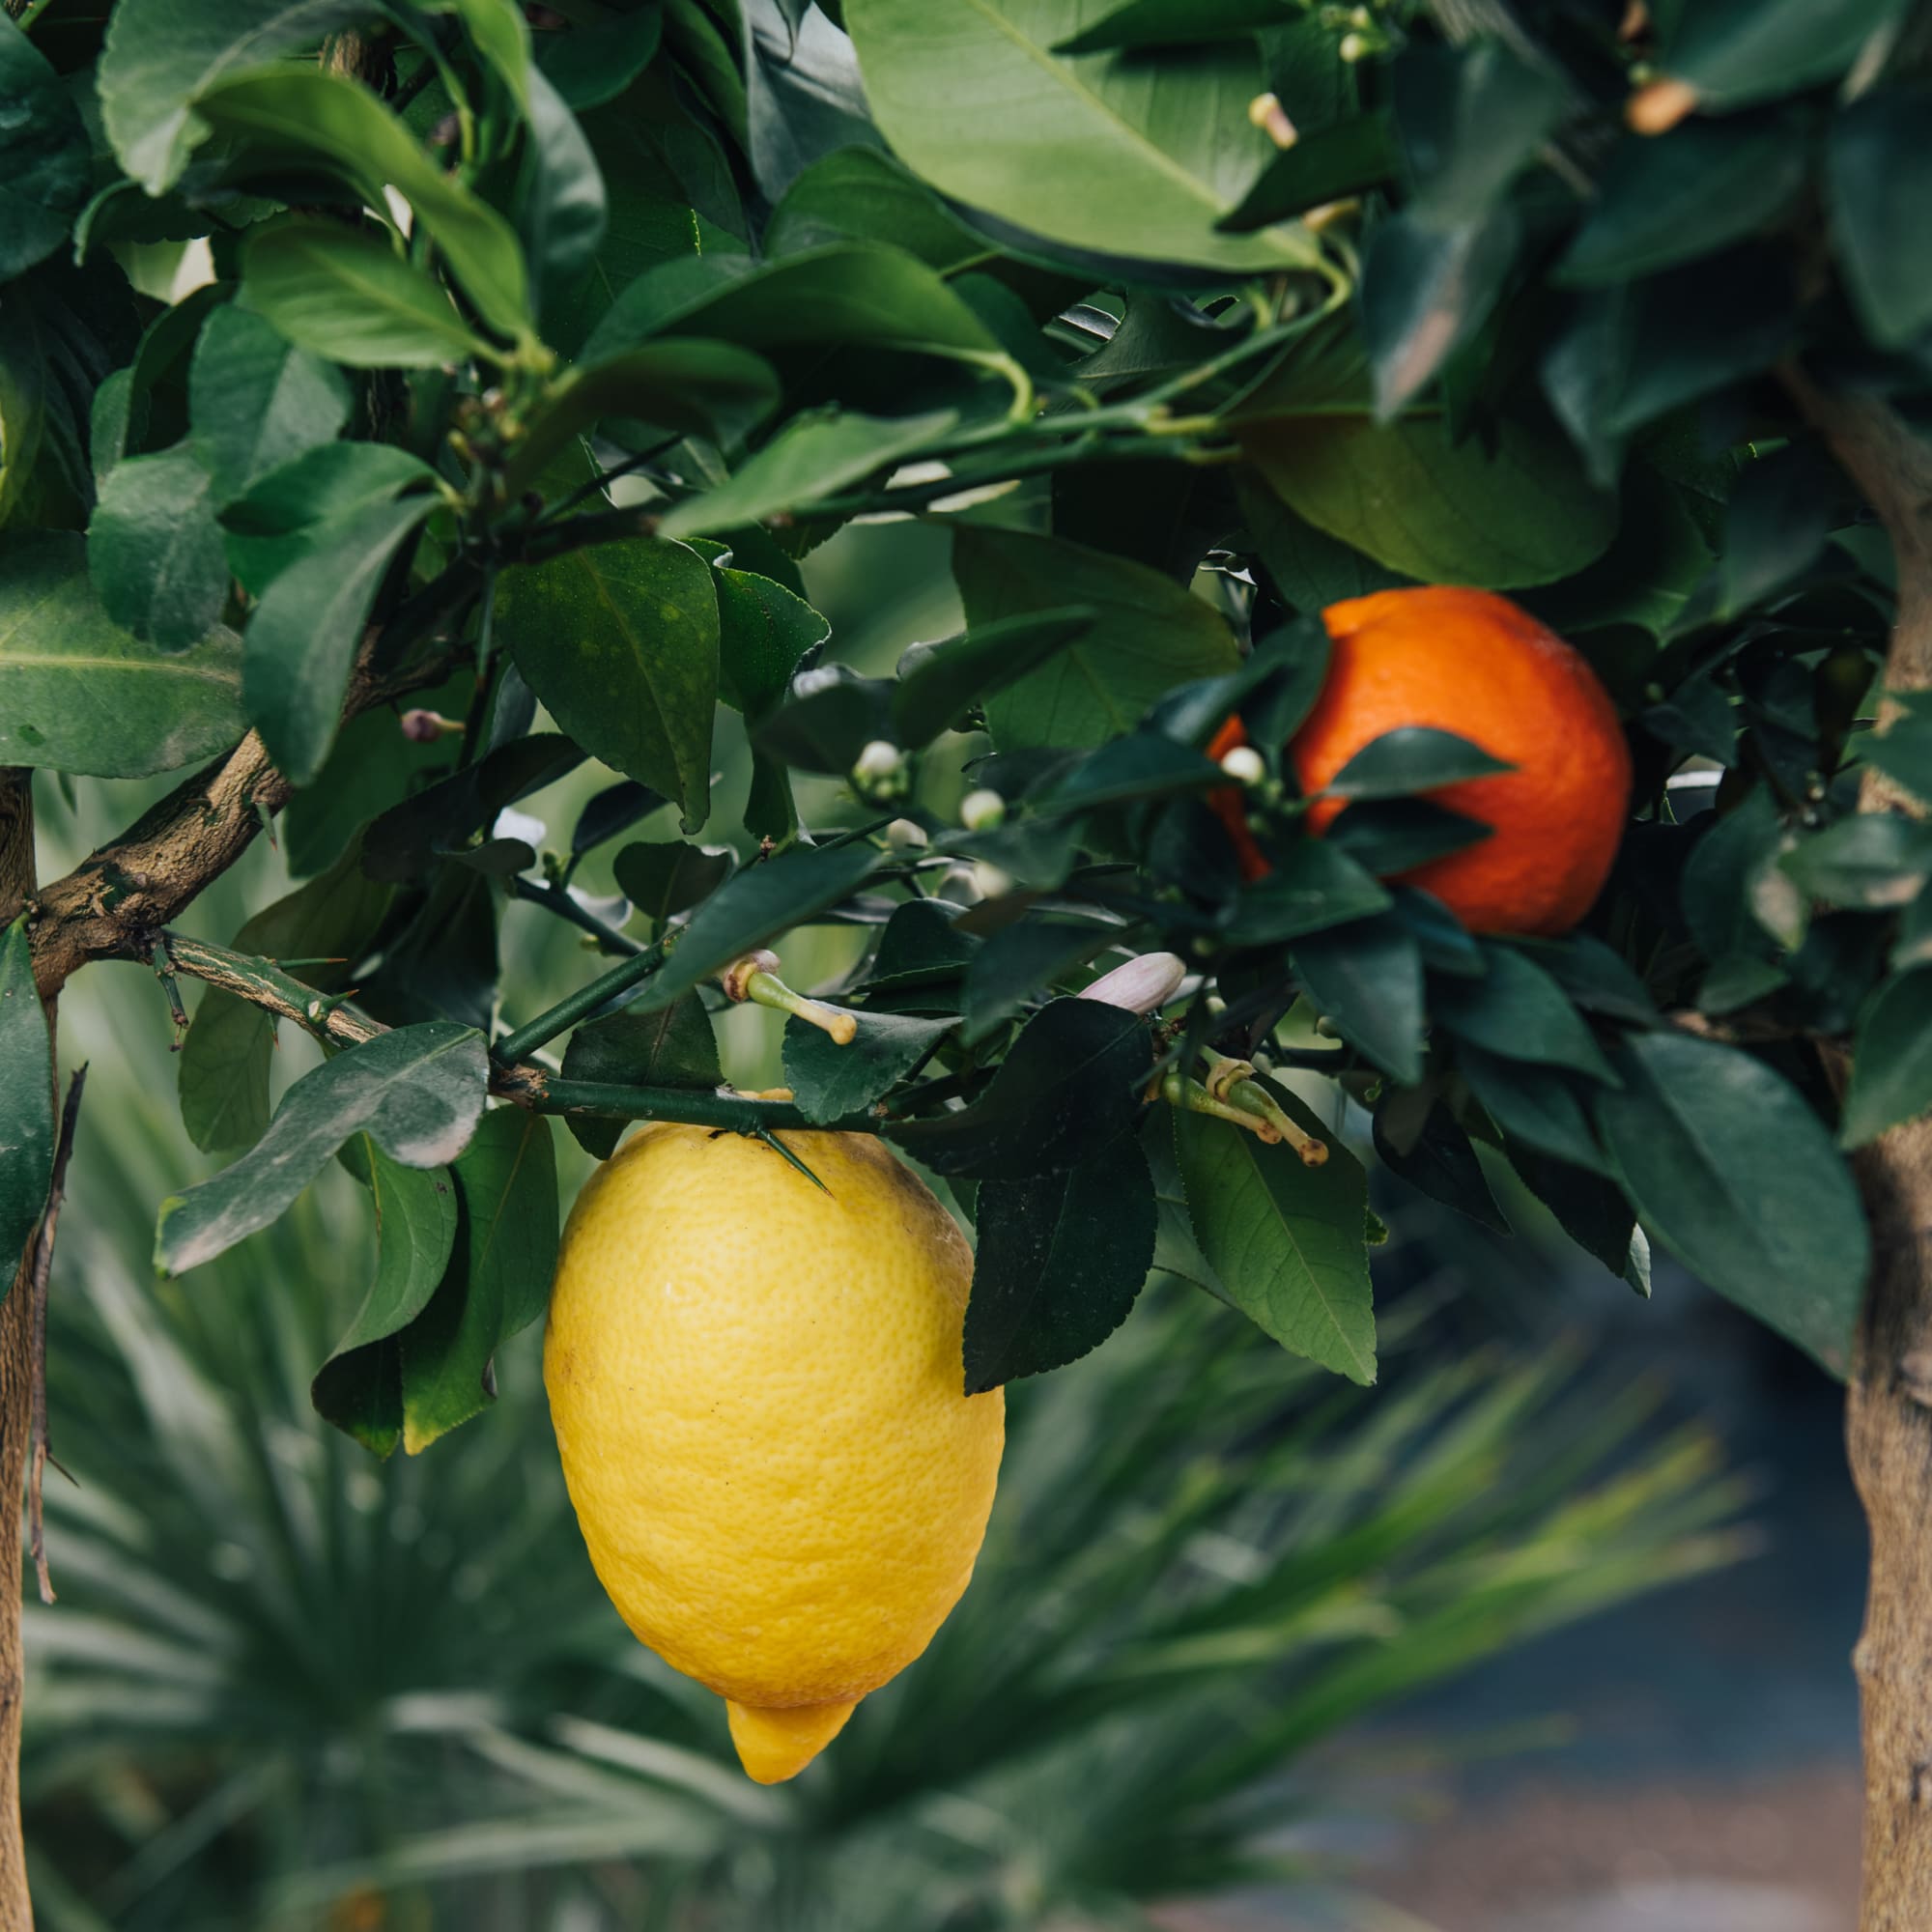 Agrumi - Limone lunario e mandarino avana